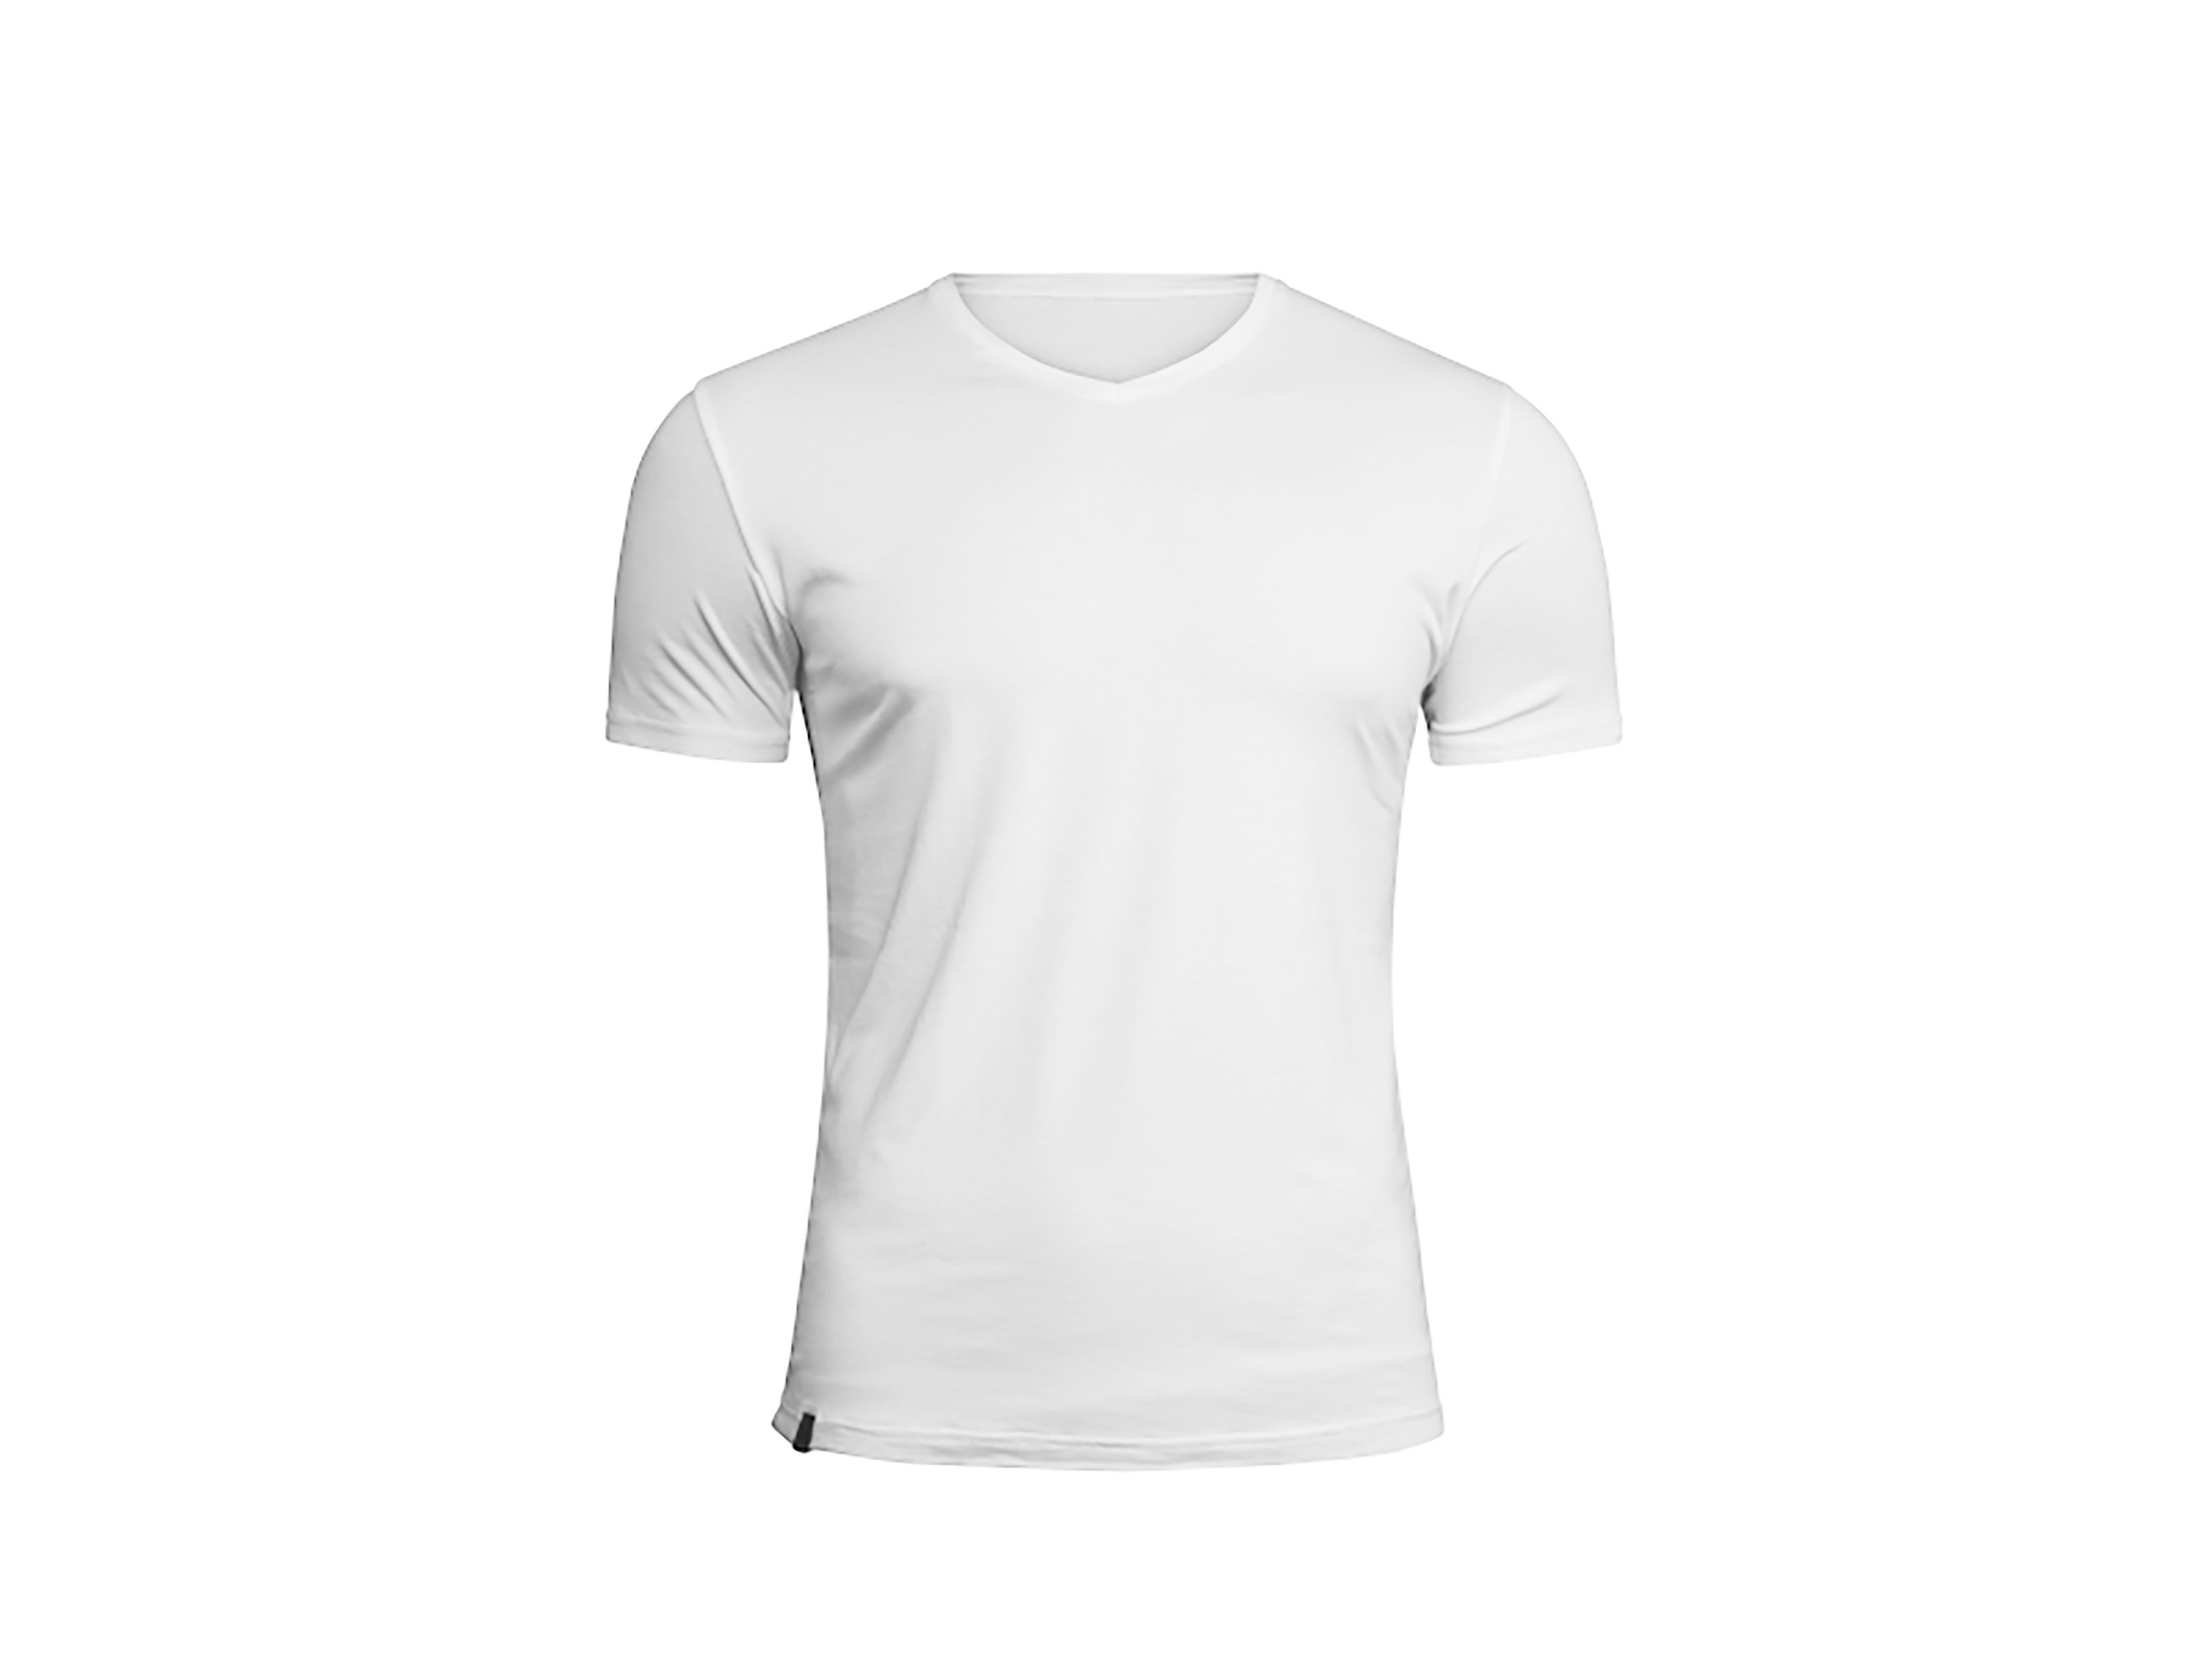 Lavrans Wear V-Neck T-Shirt White, 1 stk.